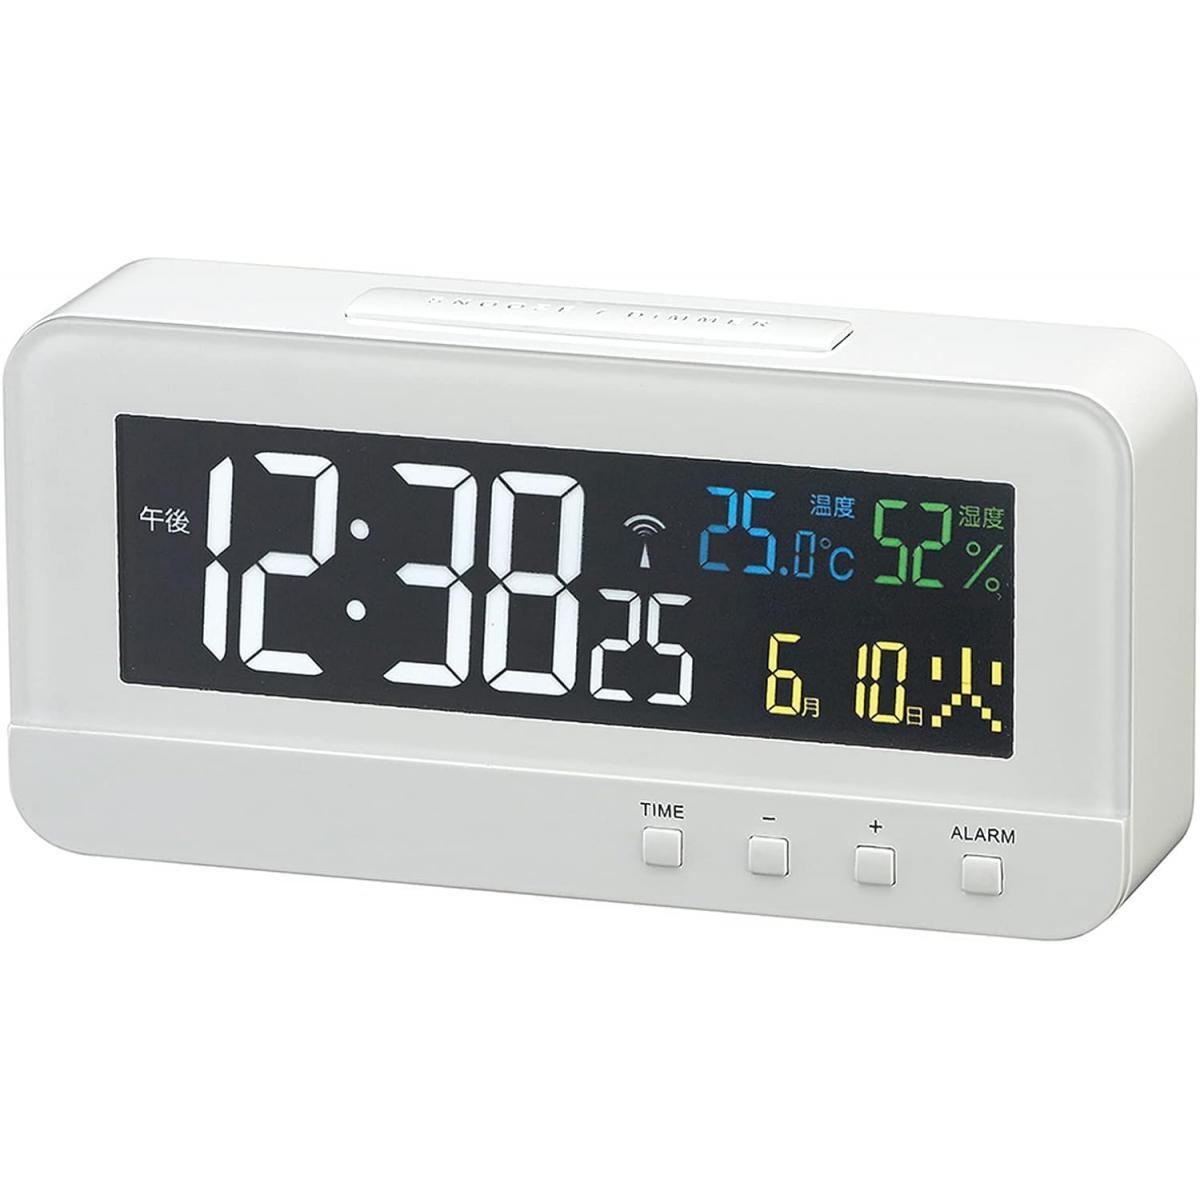 MAG 置き時計 ホワイト 電波 デジタル カラーハーブ 温度 湿度 日付 曜日表示 T-684WH AC電源 置時計 電波時計 マグ